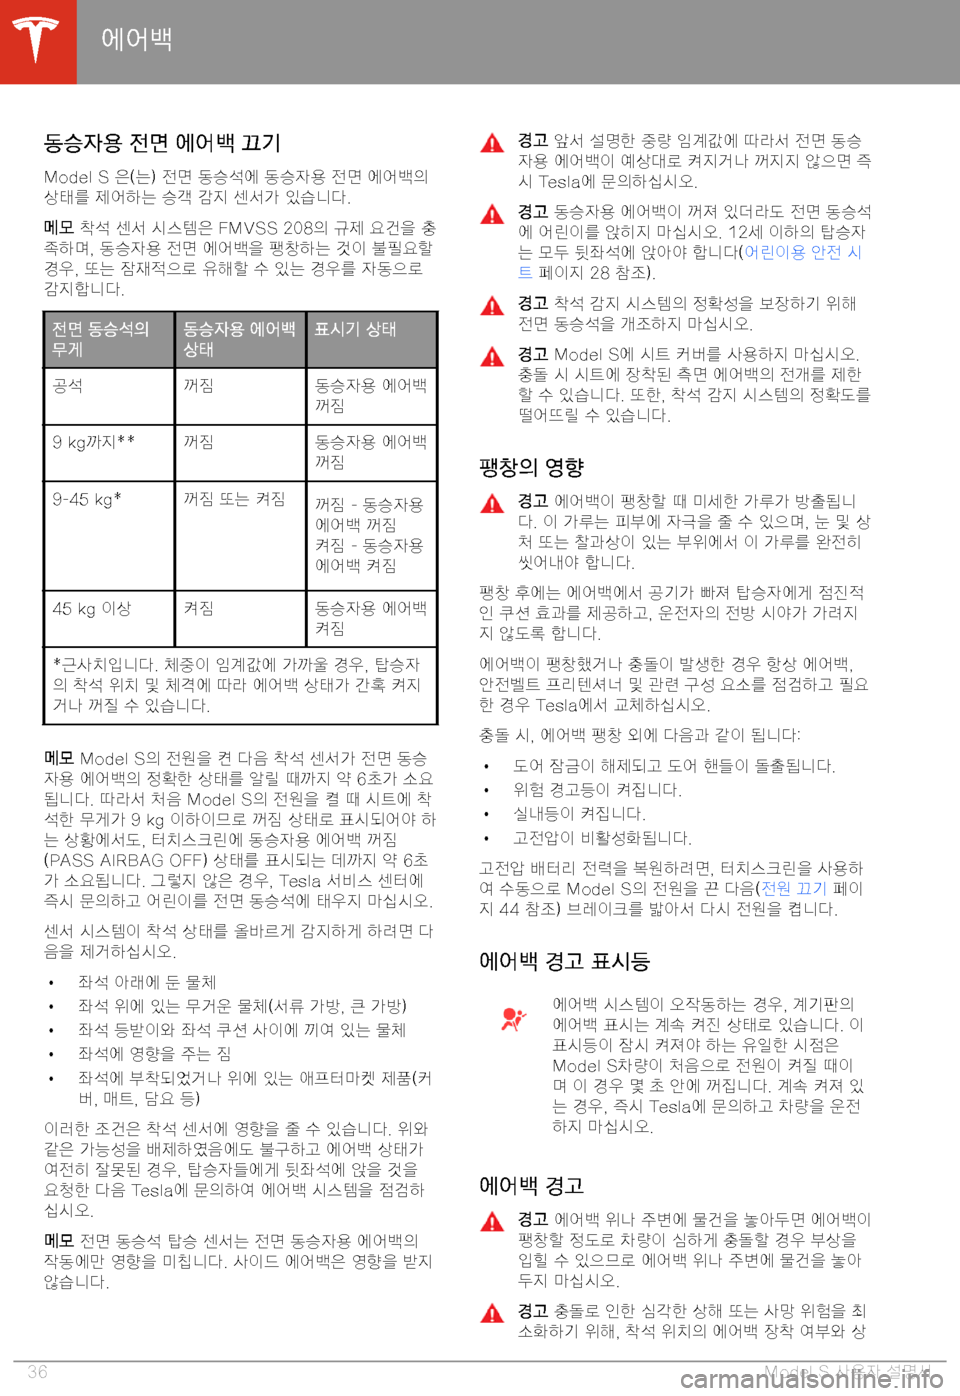 TESLA MODEL S 2020  사용자 가이드 (in Korean) )